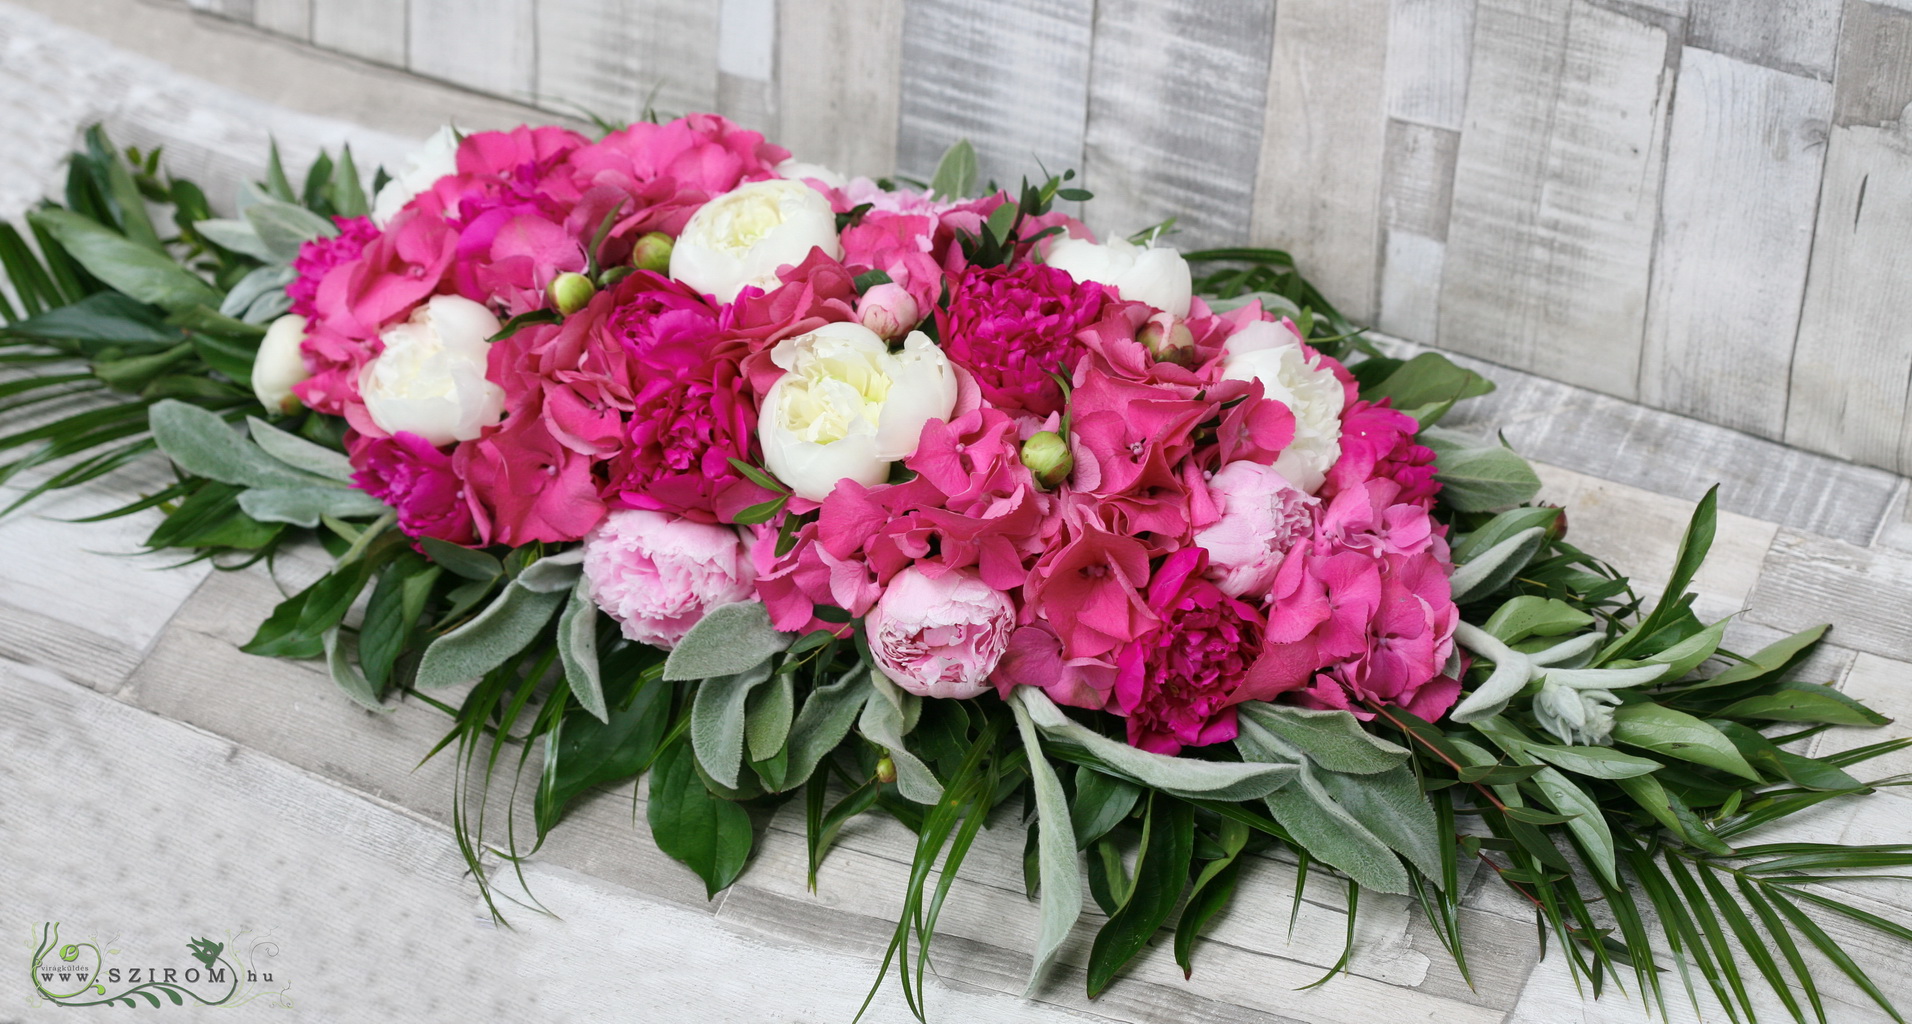 flower delivery Budapest - Main table centerpiece with hydrangeas (peony, hydrangea, pink), wedding